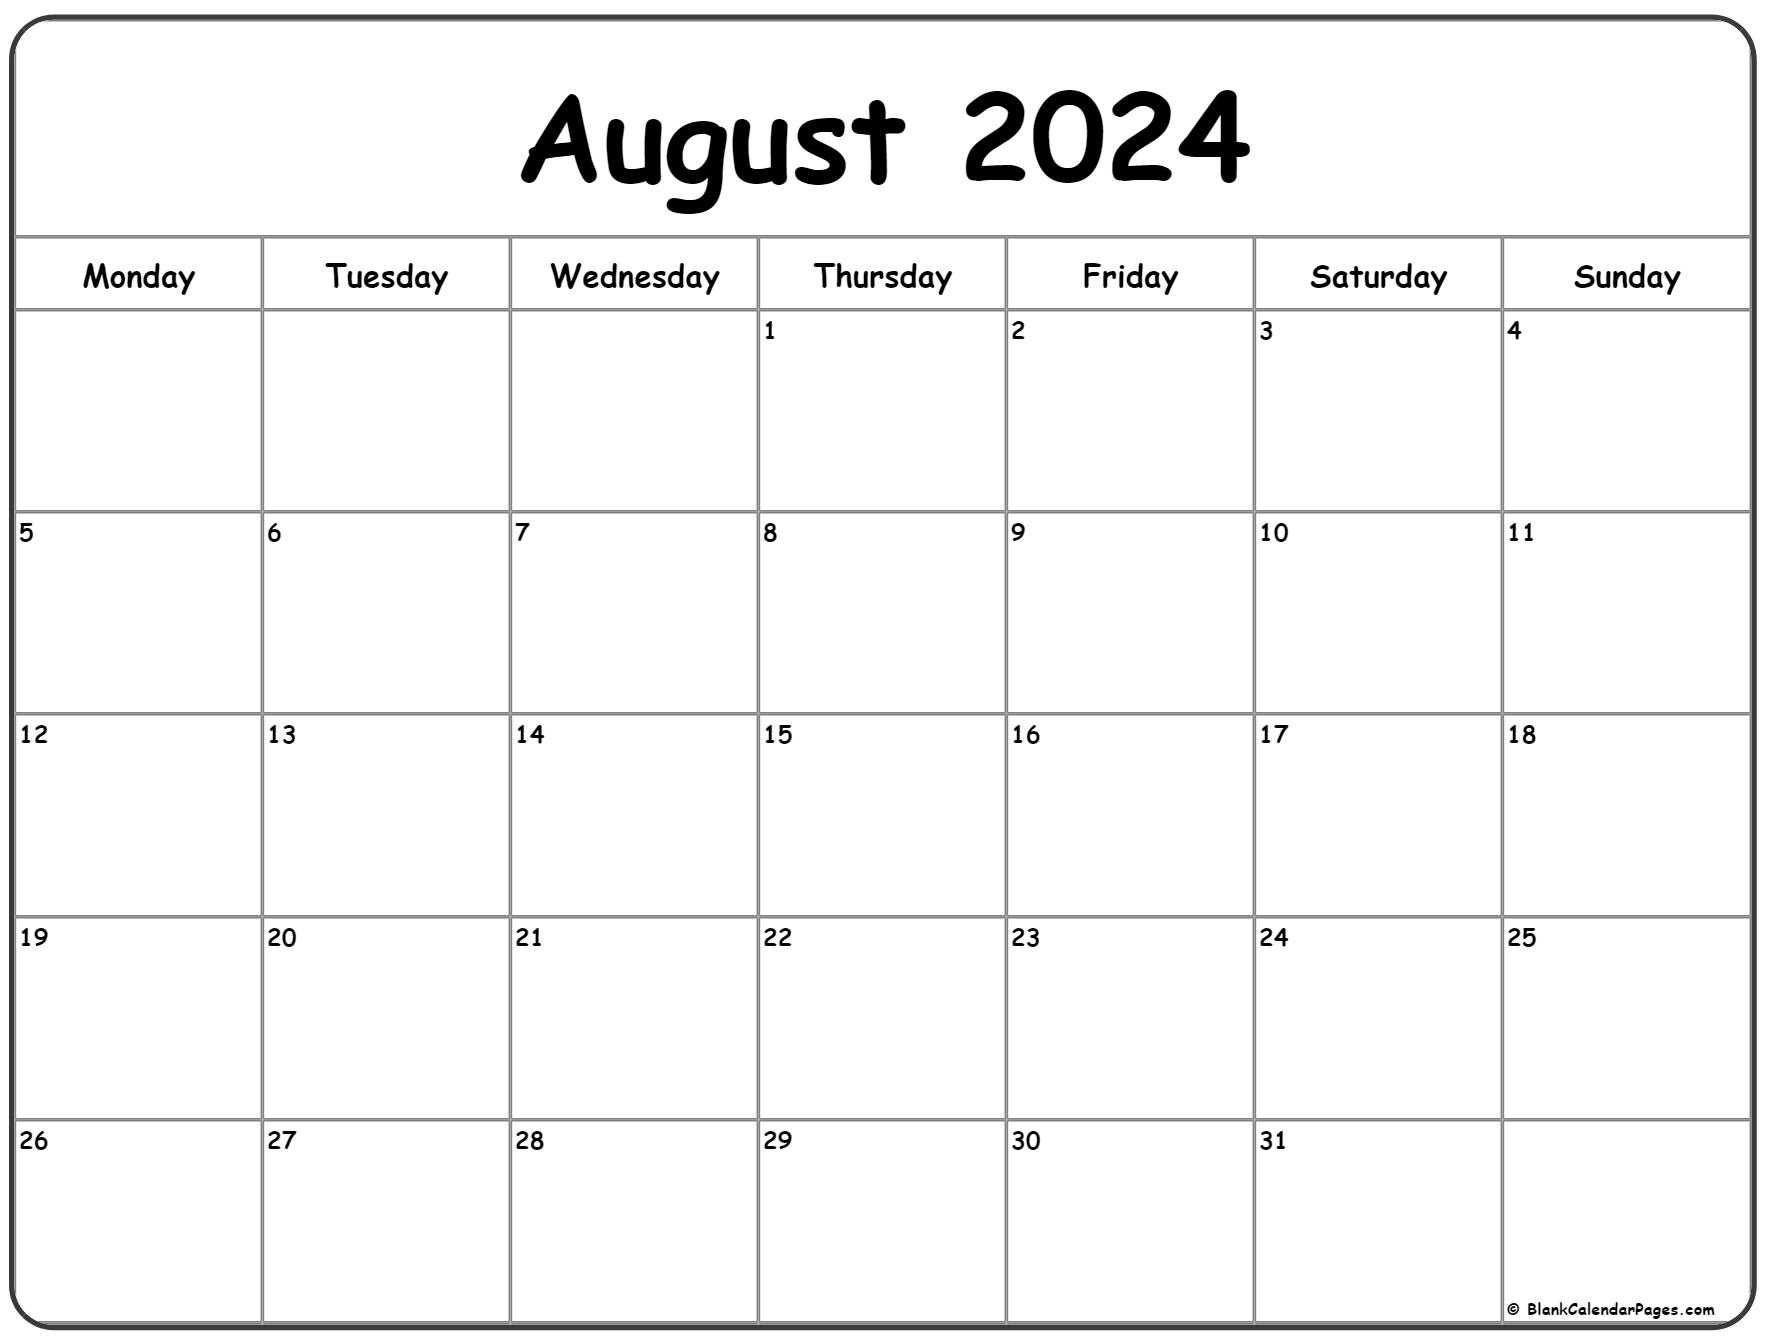 August 2024 Monday Calendar | Monday To Sunday for Aug 2024 Calendar Printable